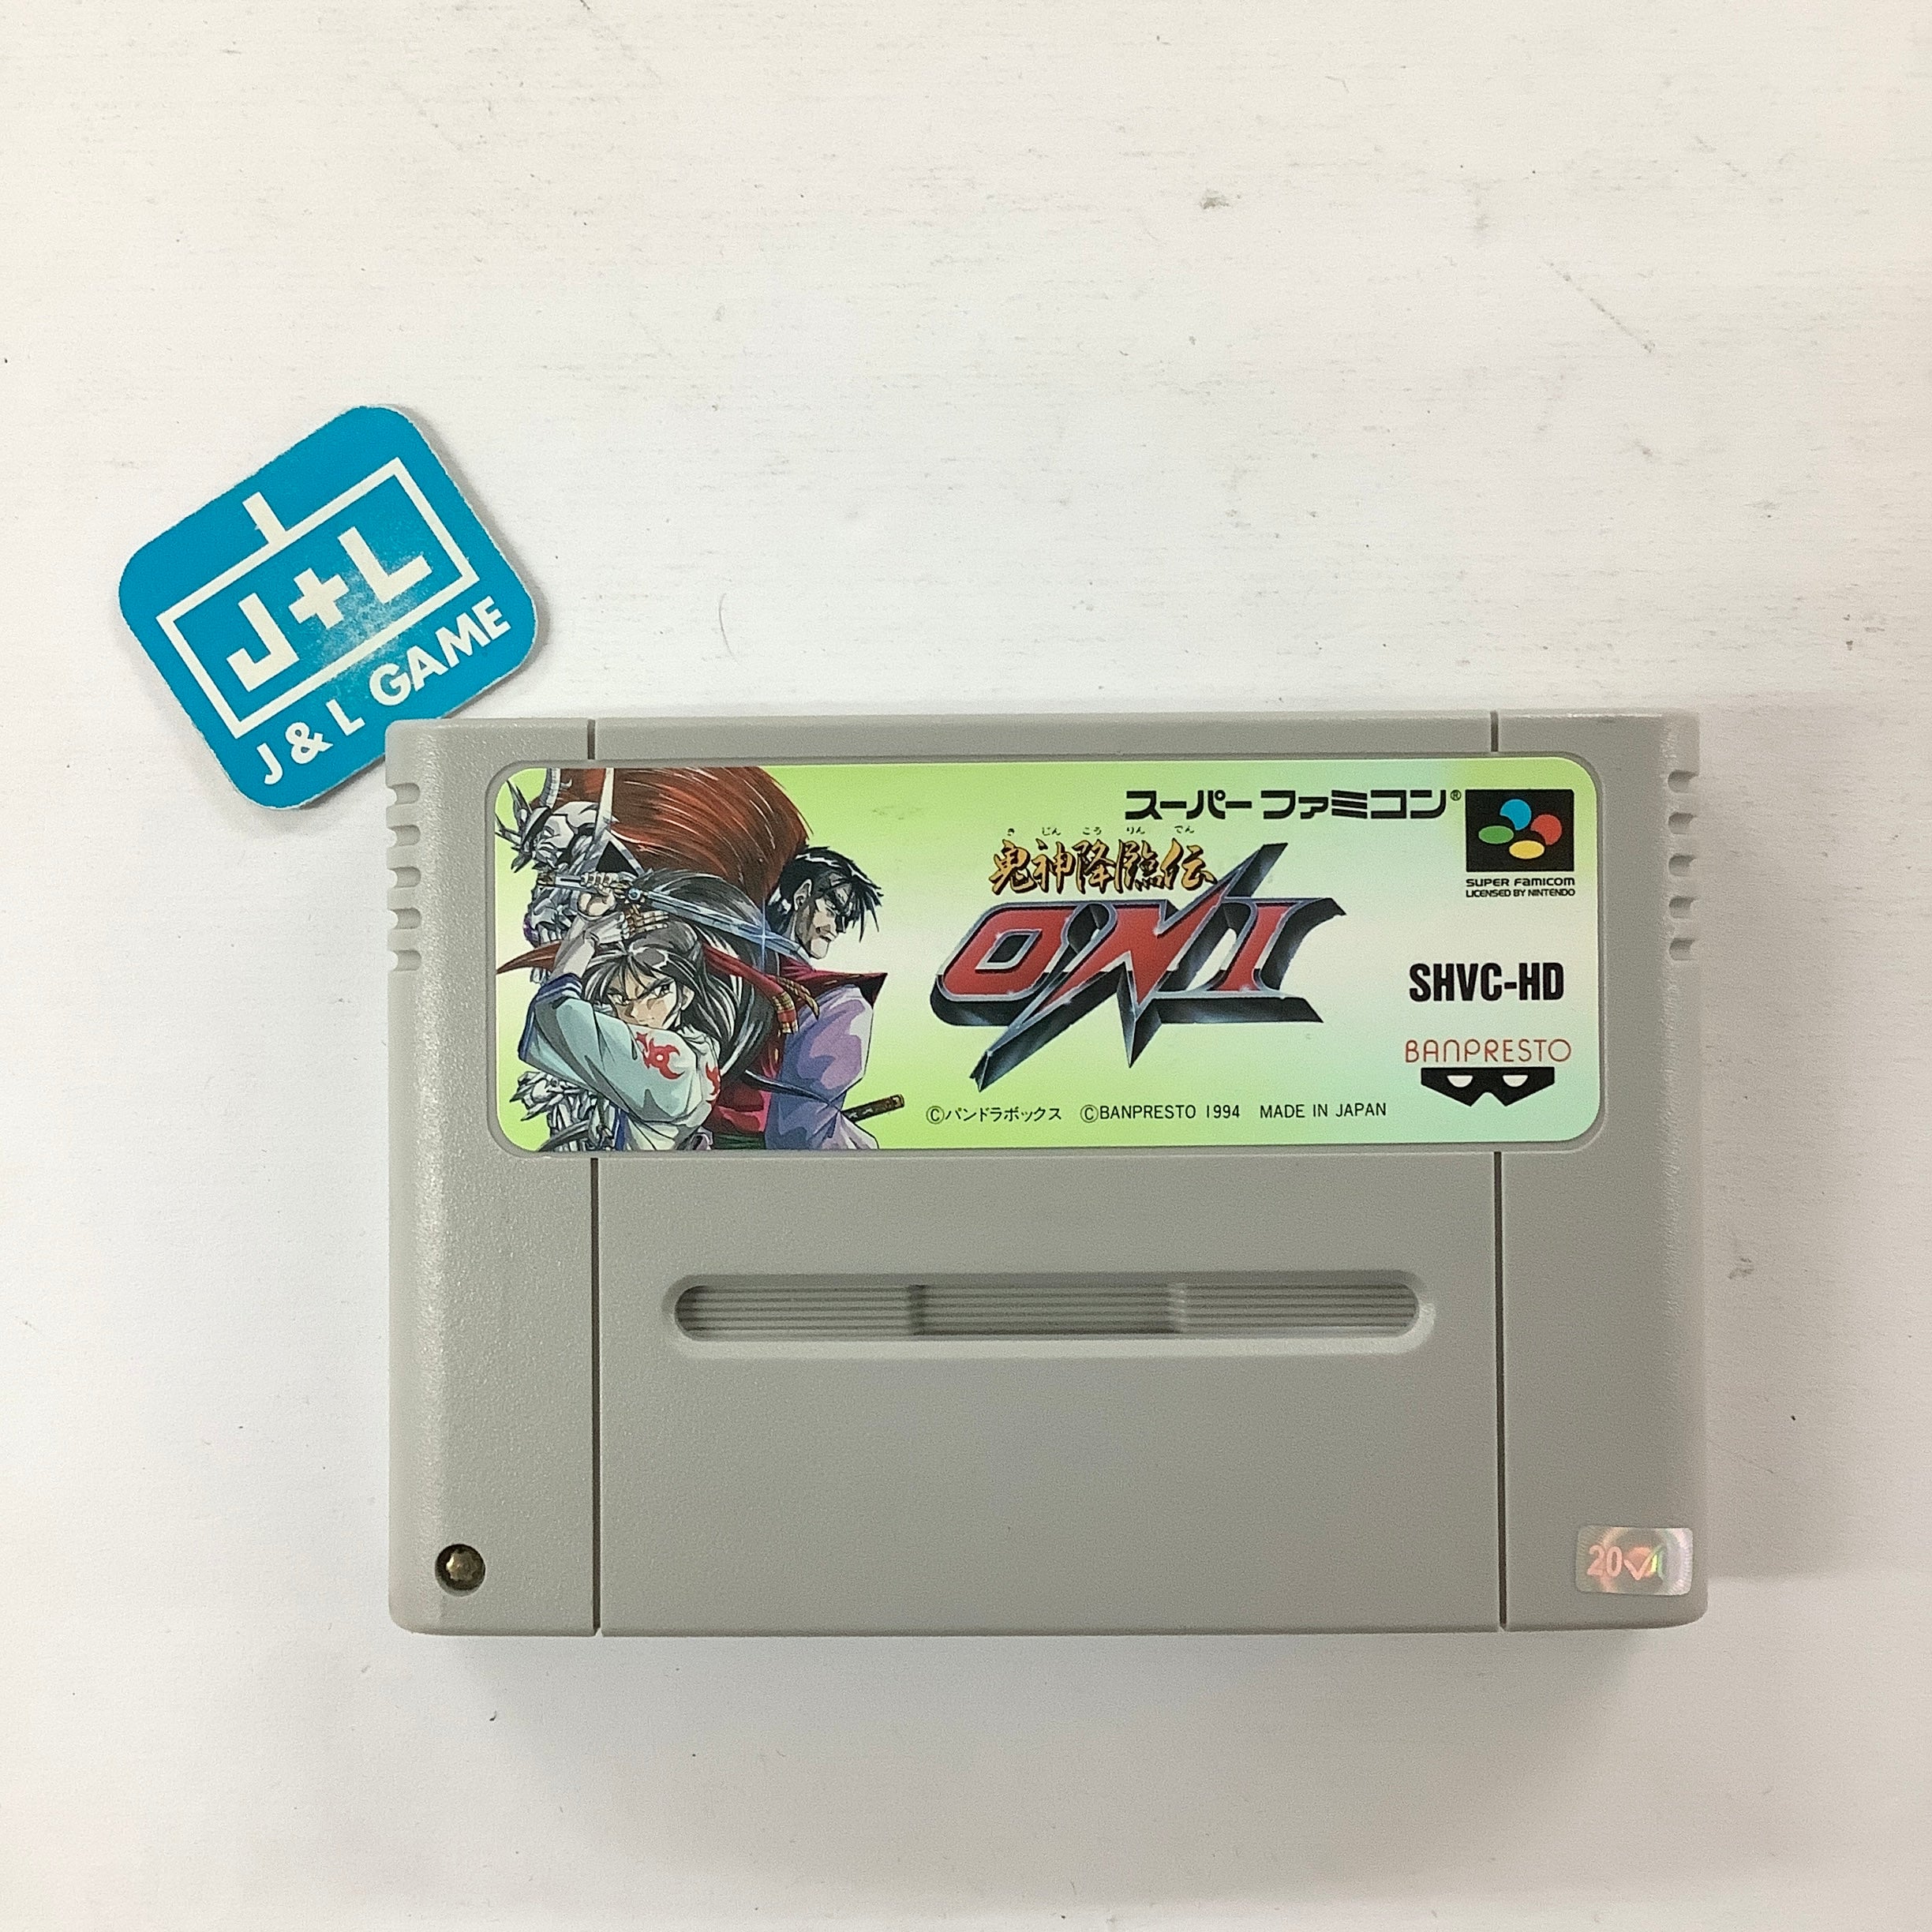 Kishin Korinden Oni - (SFC) Super Famicom [Pre-Owned] (Japanese Import) Video Games Banpresto   